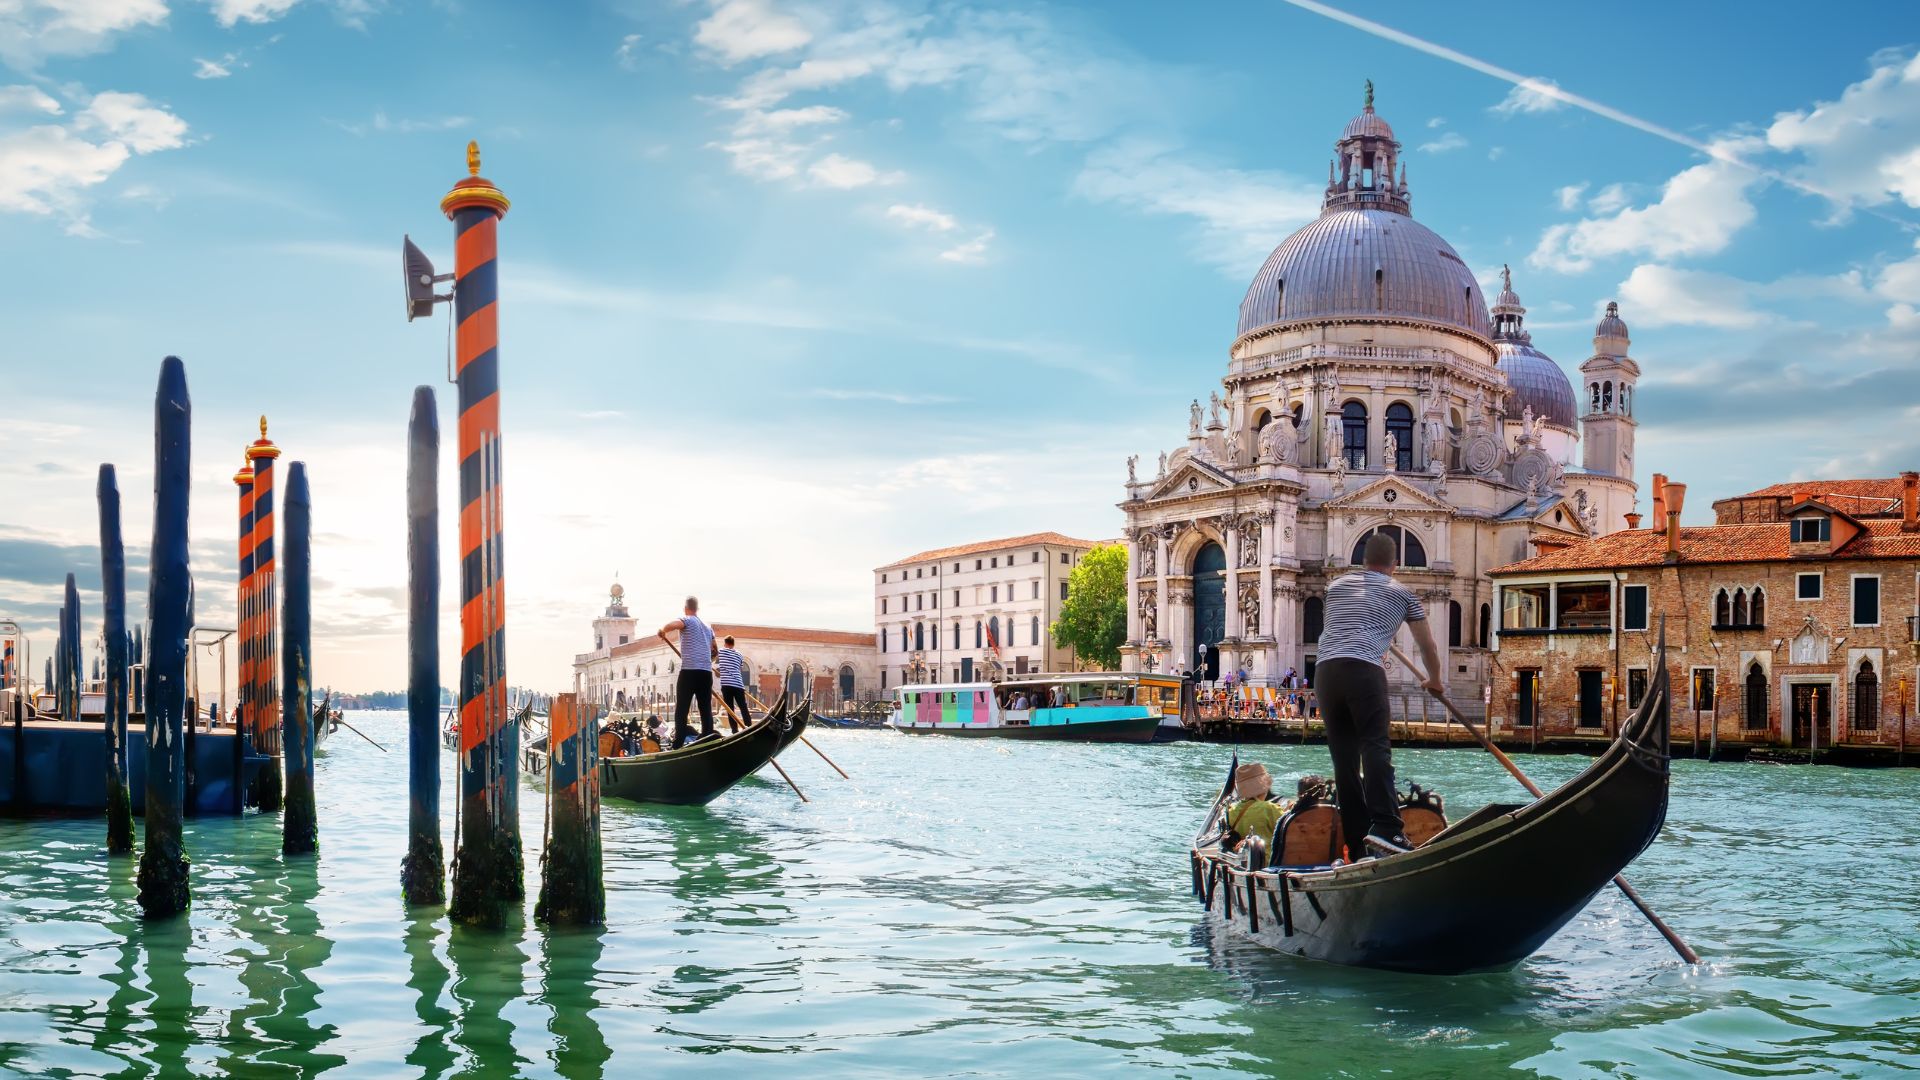 Visite Venecia antes de que desaparezca, expertos están asustados